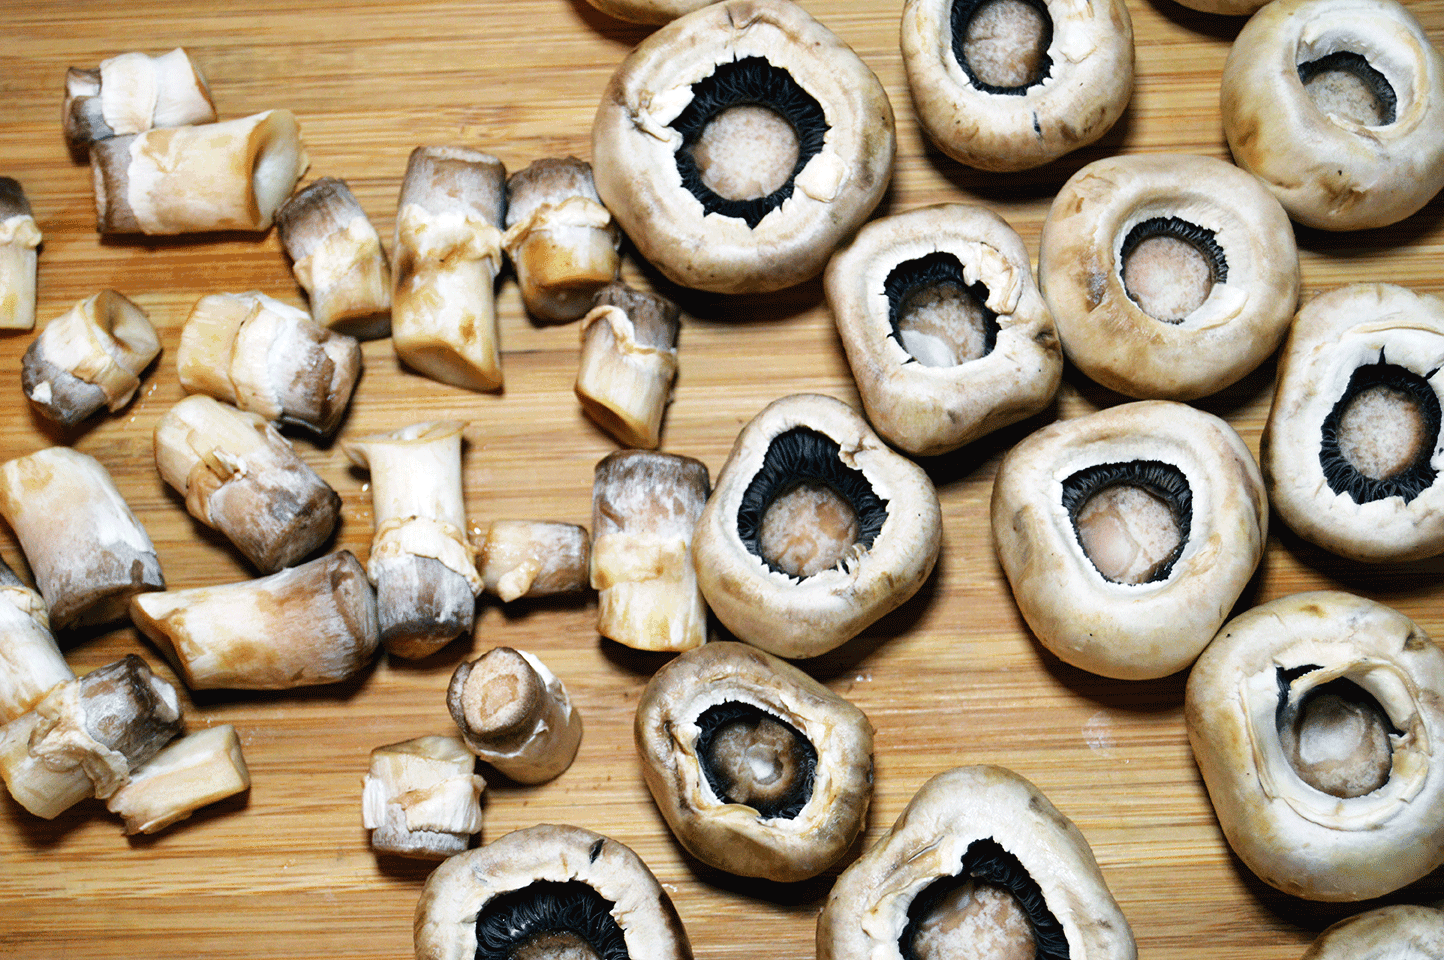 mushroom caps stems removed